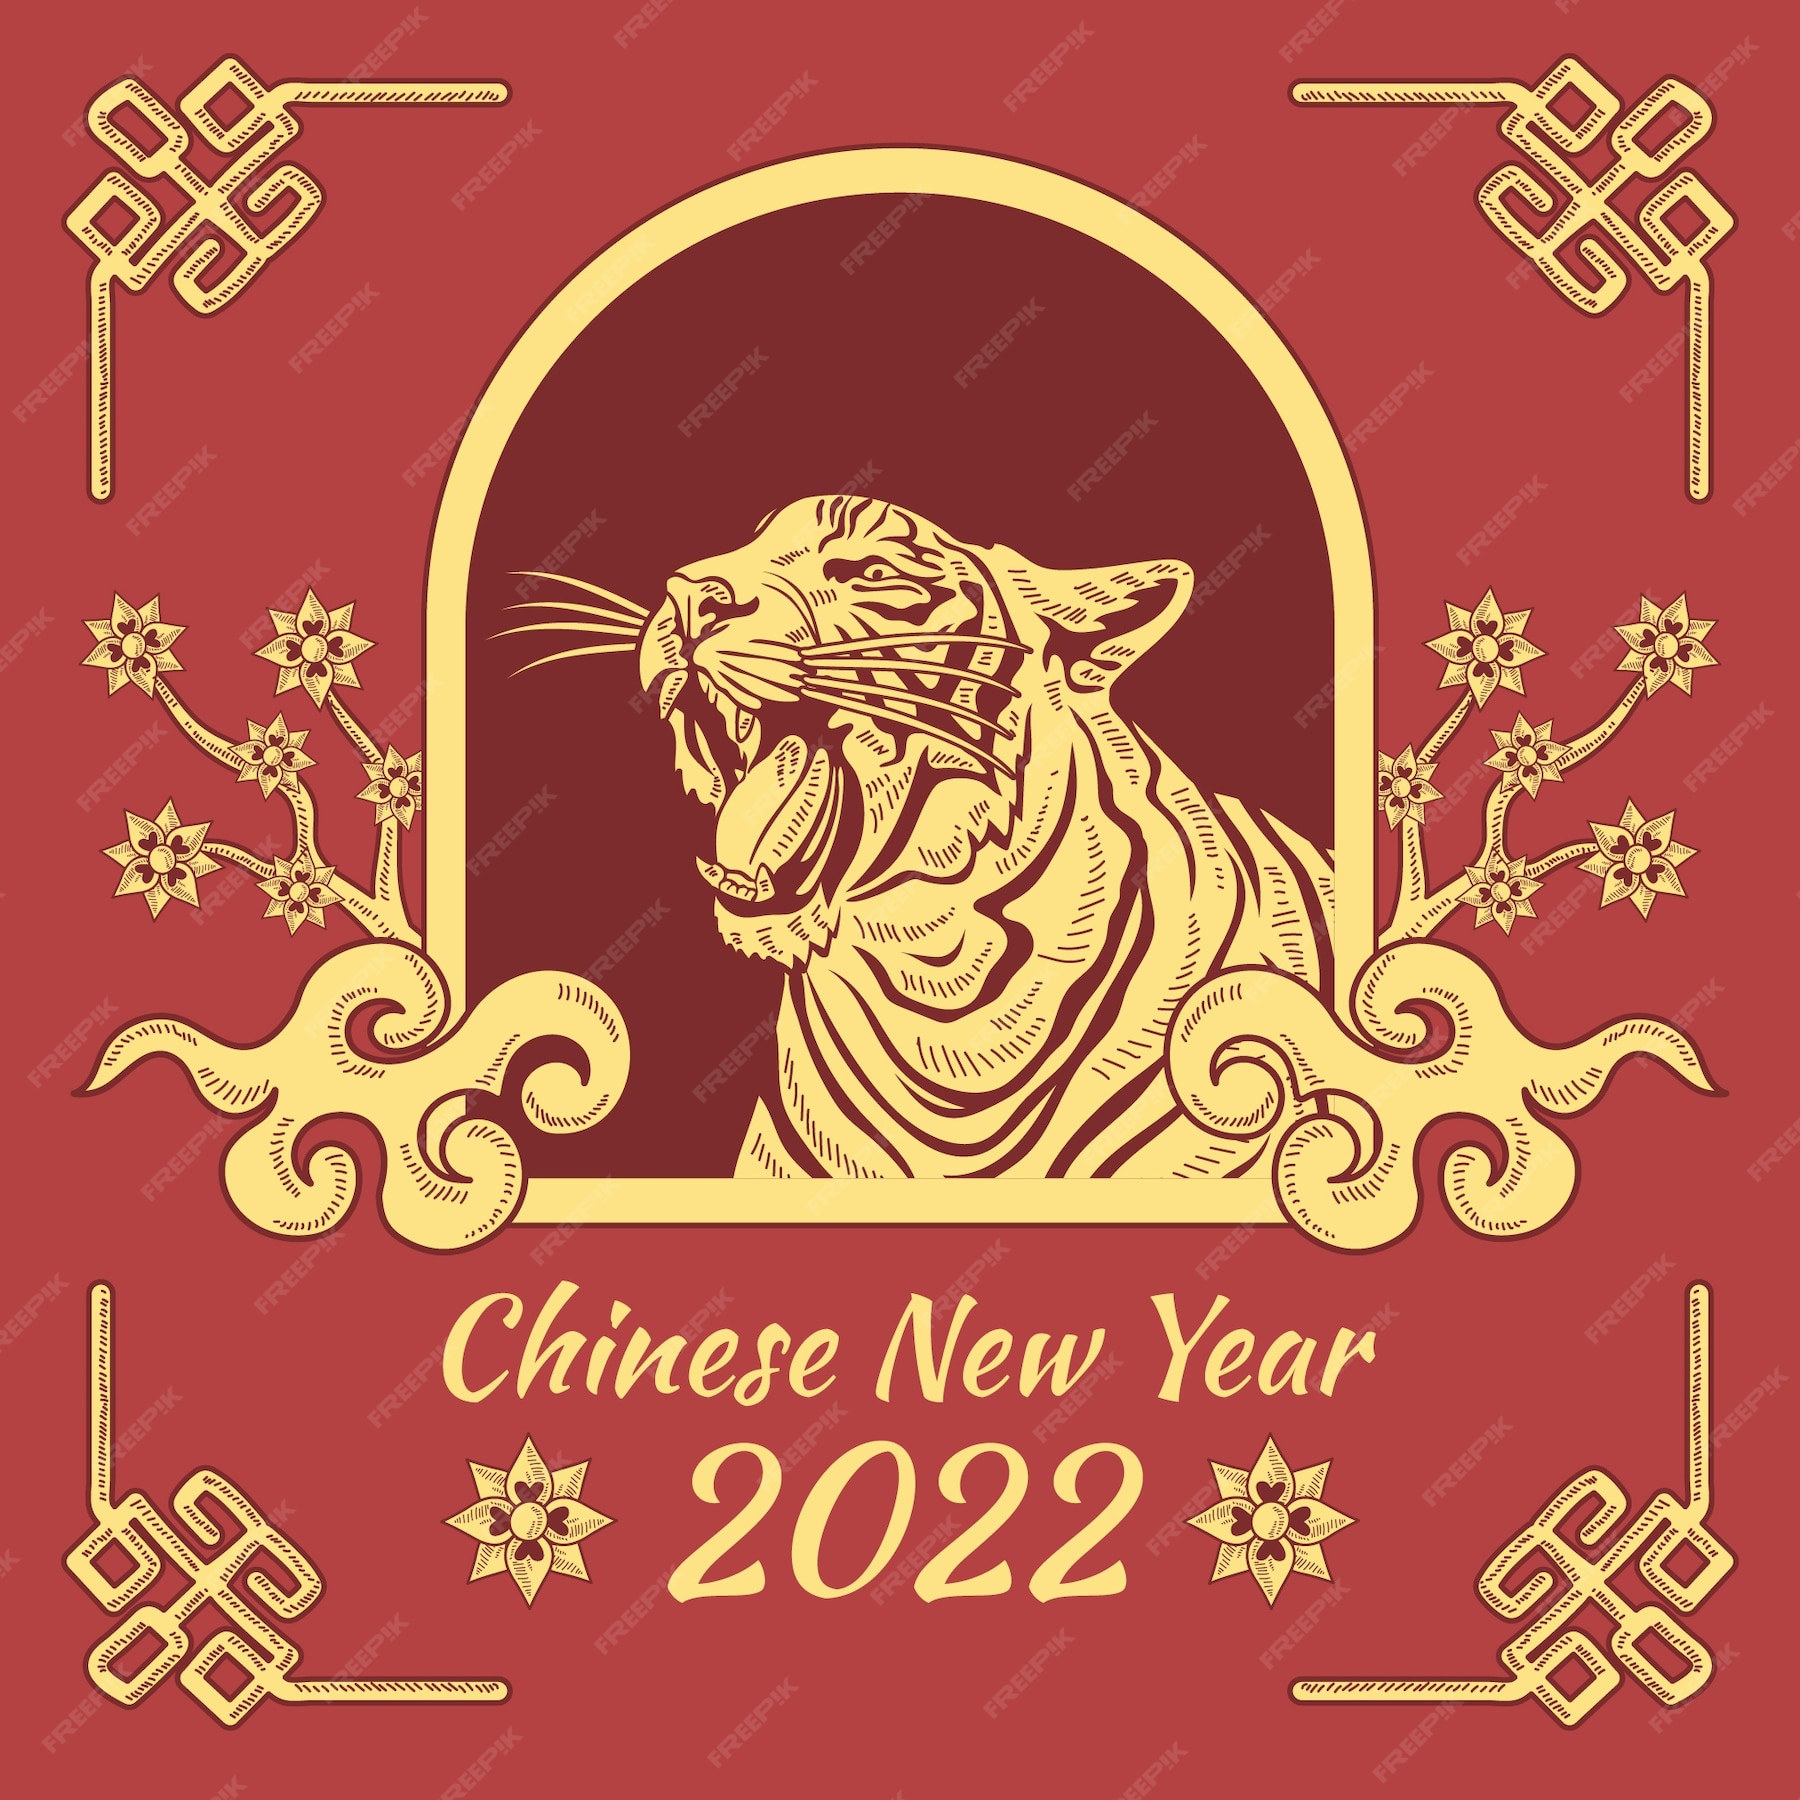 Premium Vector Hand drawn chinese new year illustration